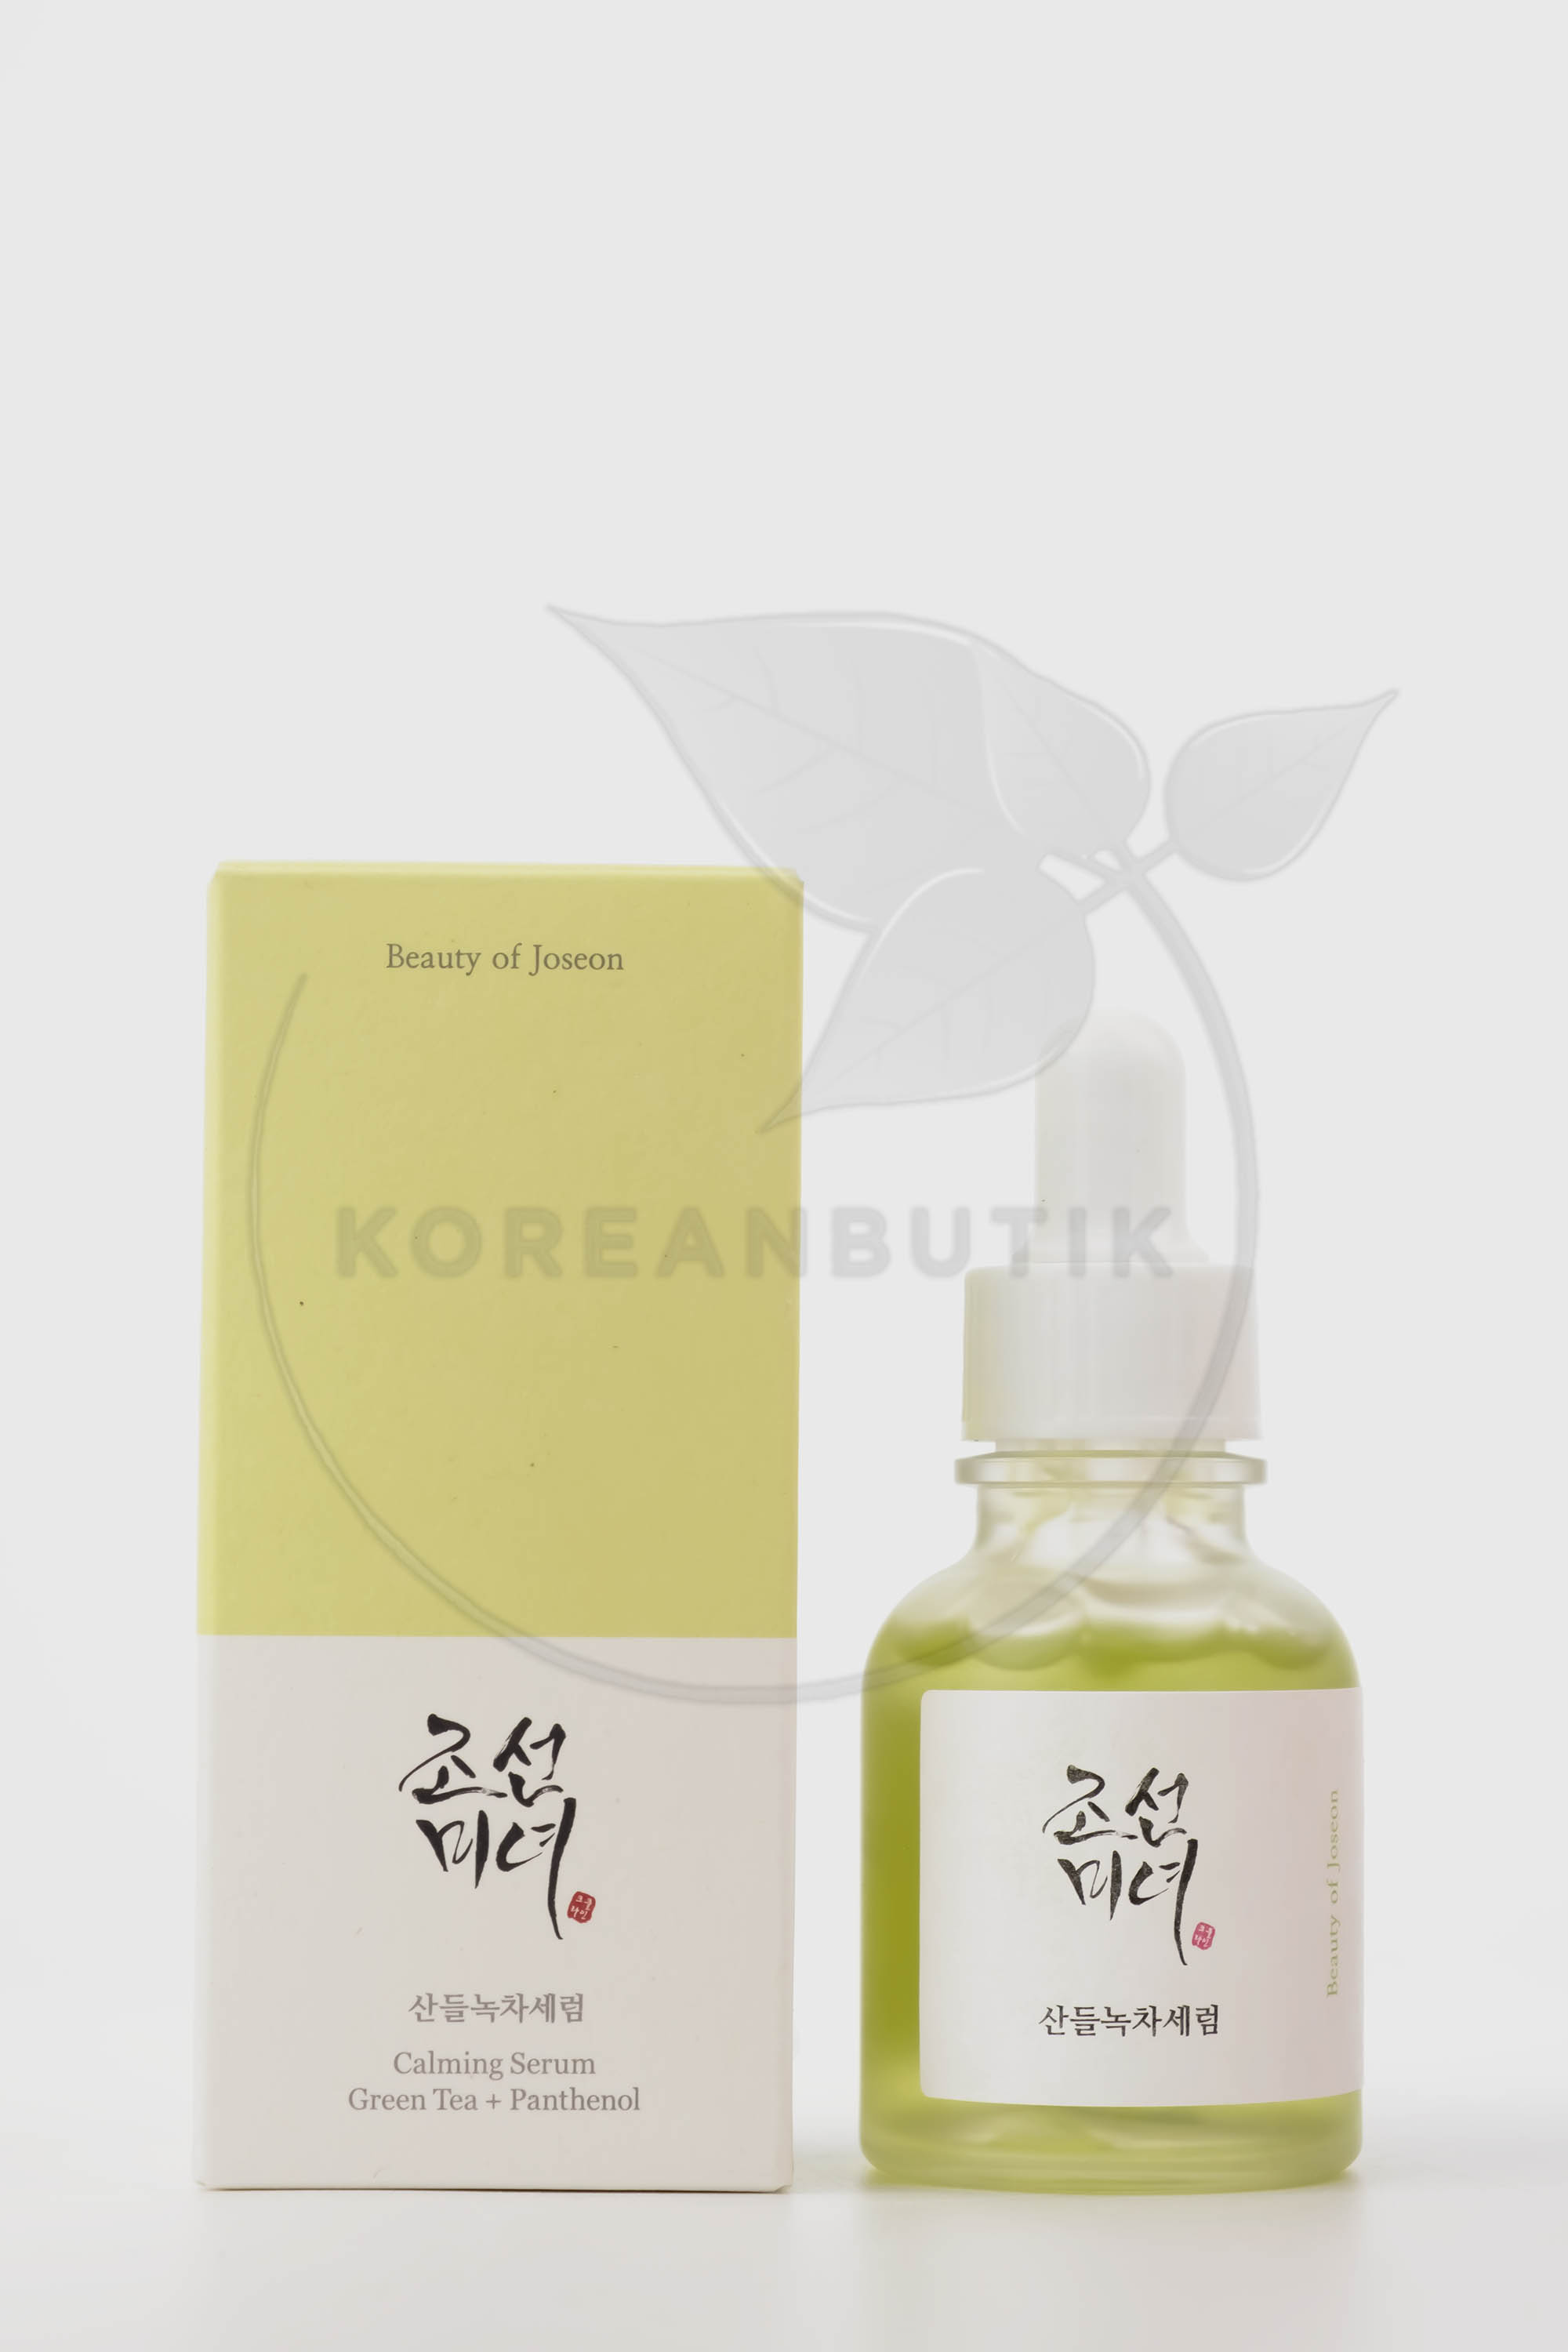  Beauty of Joseon Calming Serum: Gr..